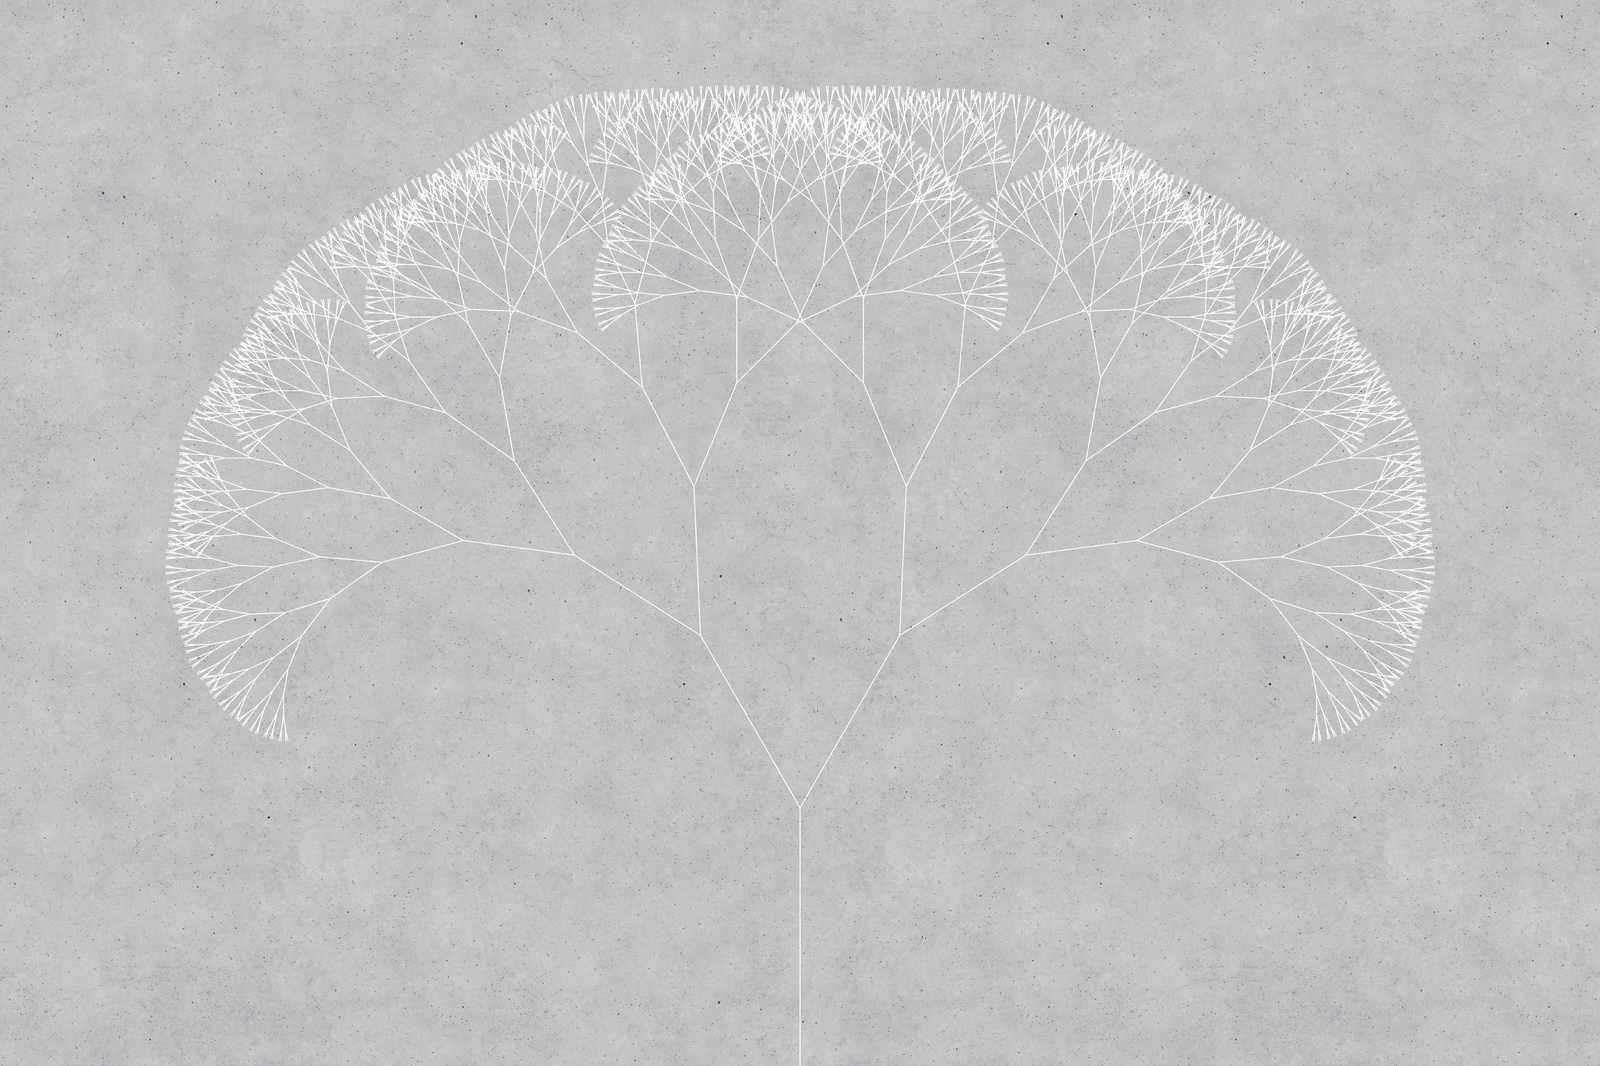             Quadro su tela Dandelions Tree | grigio, bianco - 0,90 m x 0,60 m
        